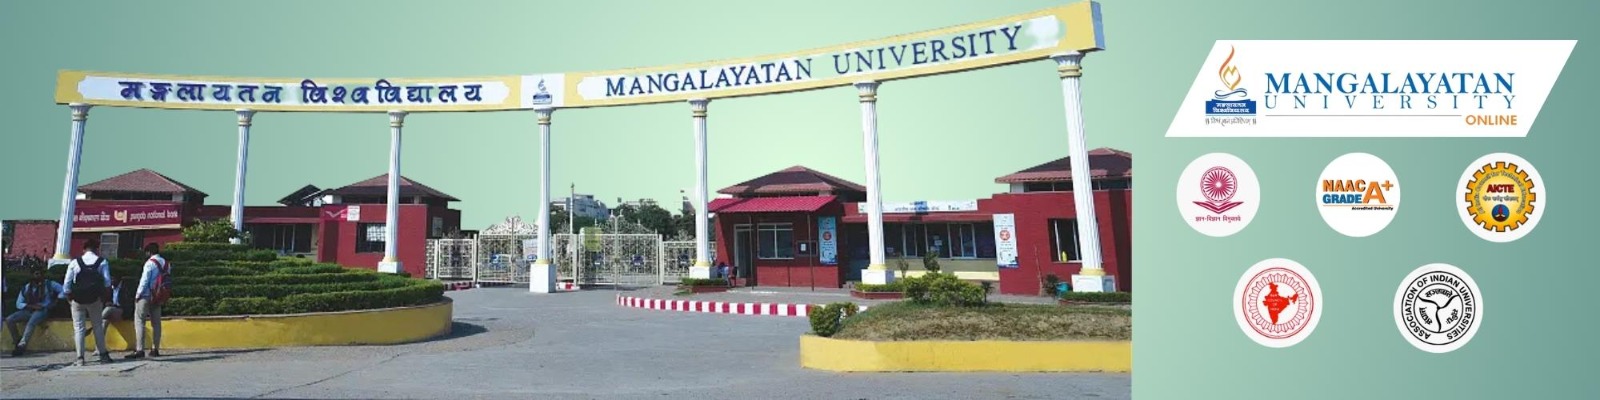 Unlock Your Future: Attain Your Online BBA Degree from Mangalayatan University